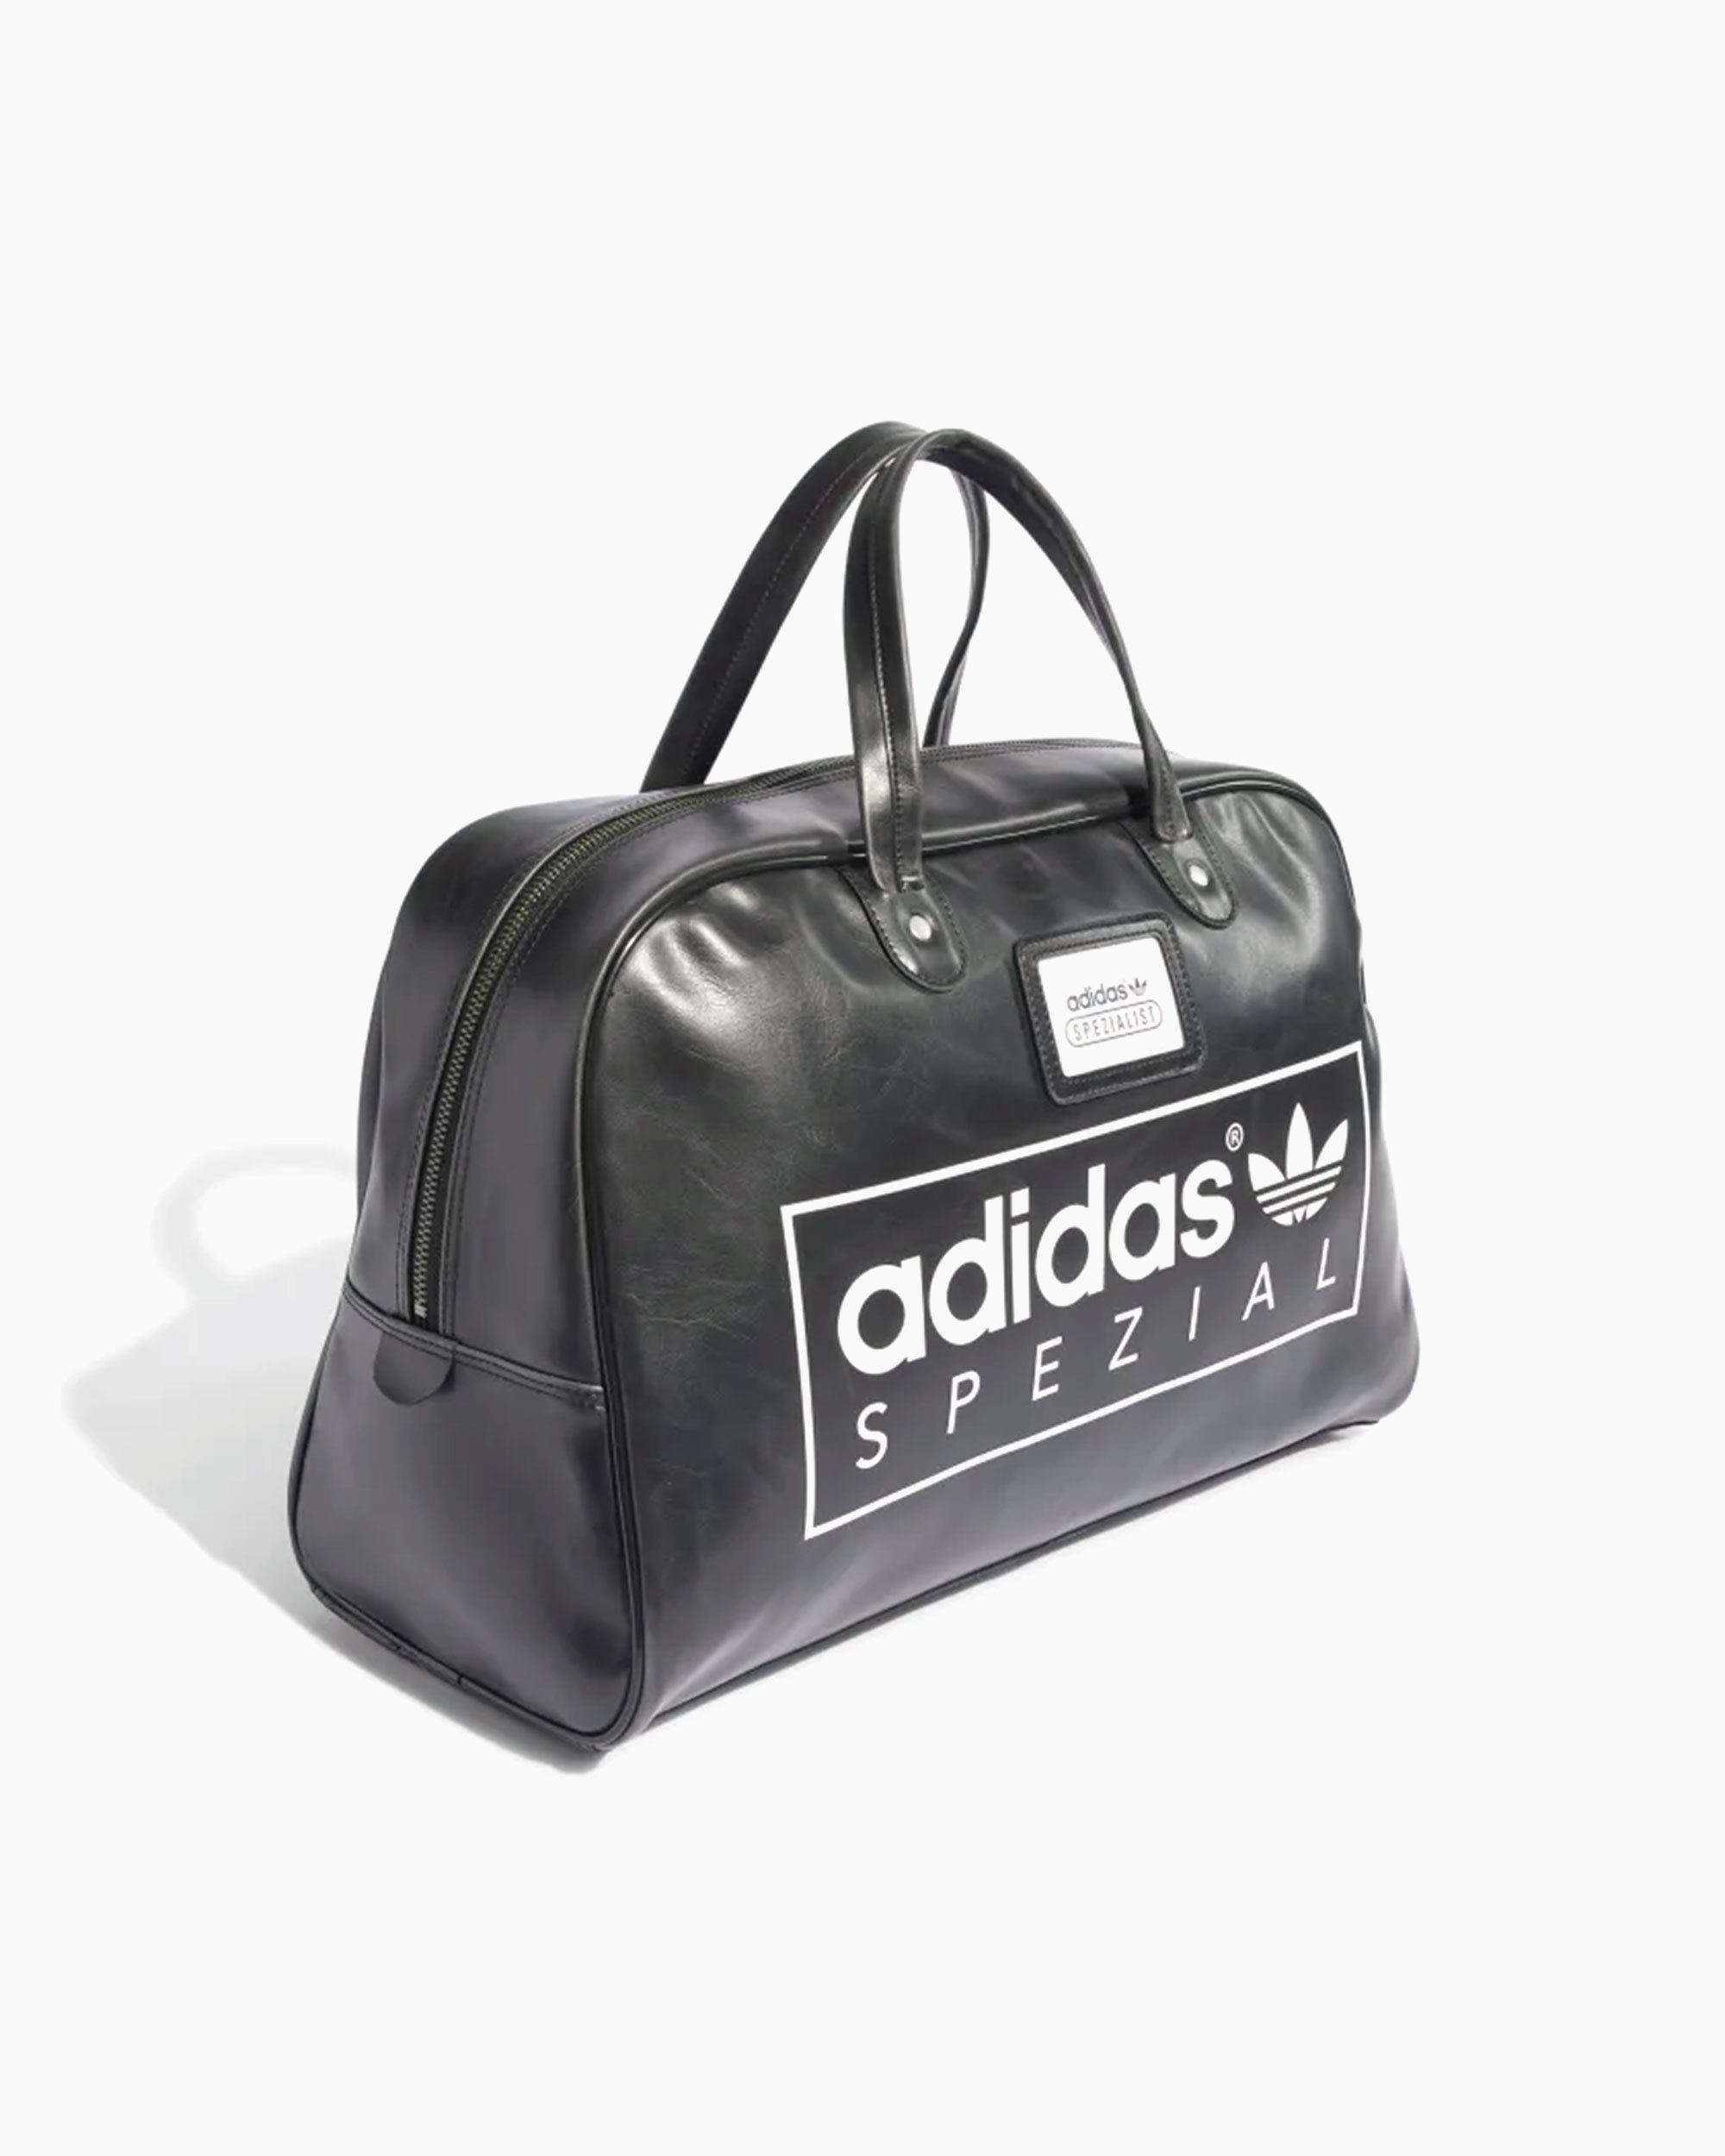 adidas Spezial Parbold 2 Unisex Bag Black HF9315| Buy Online at 